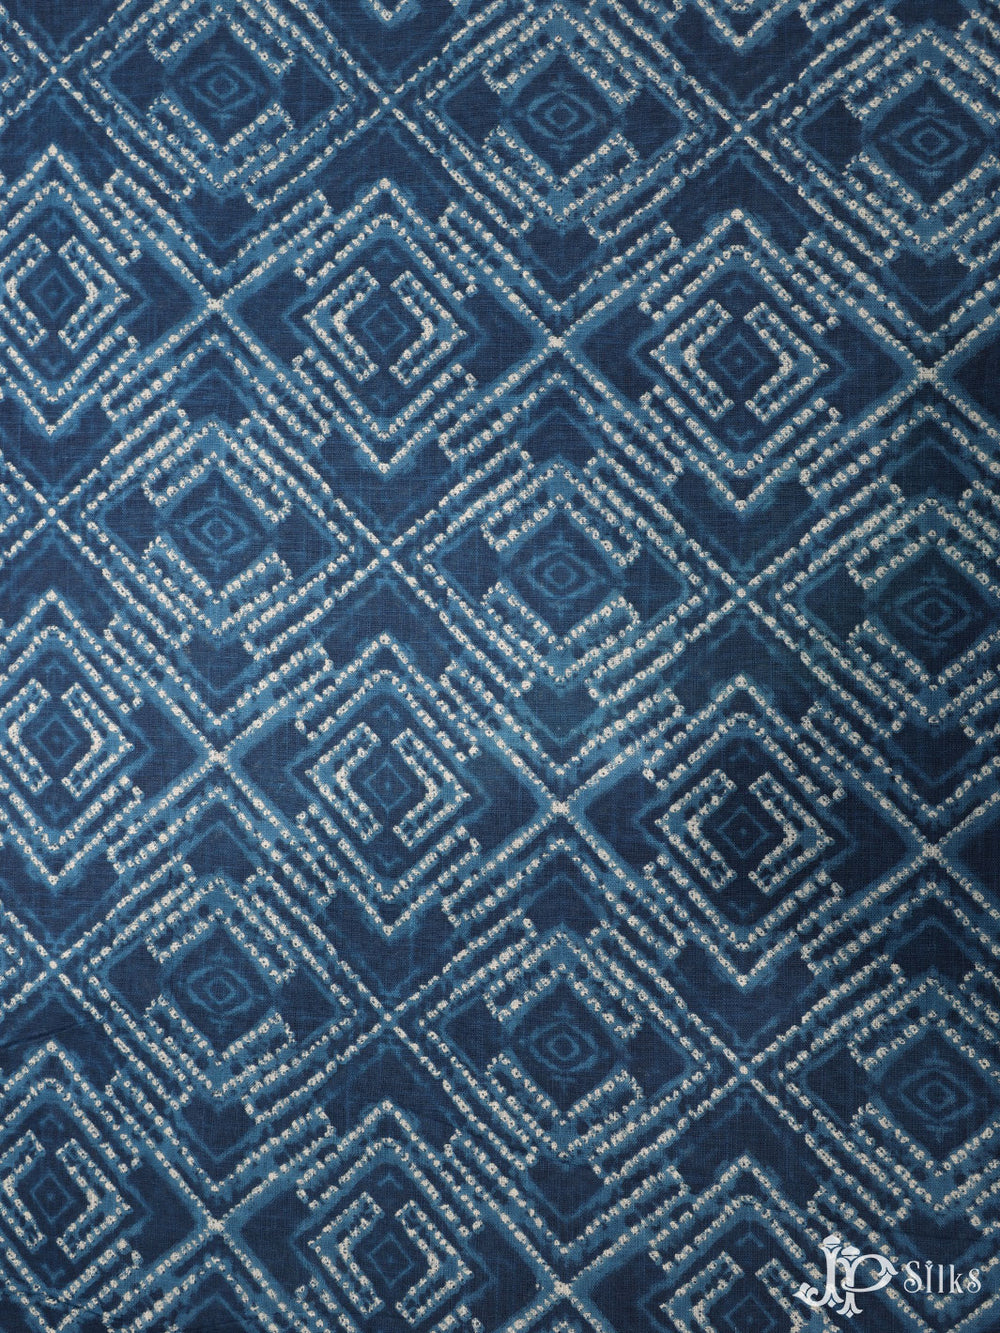 Indigo Blue Digital Printed Cotton Fabric - D1771 - View 1